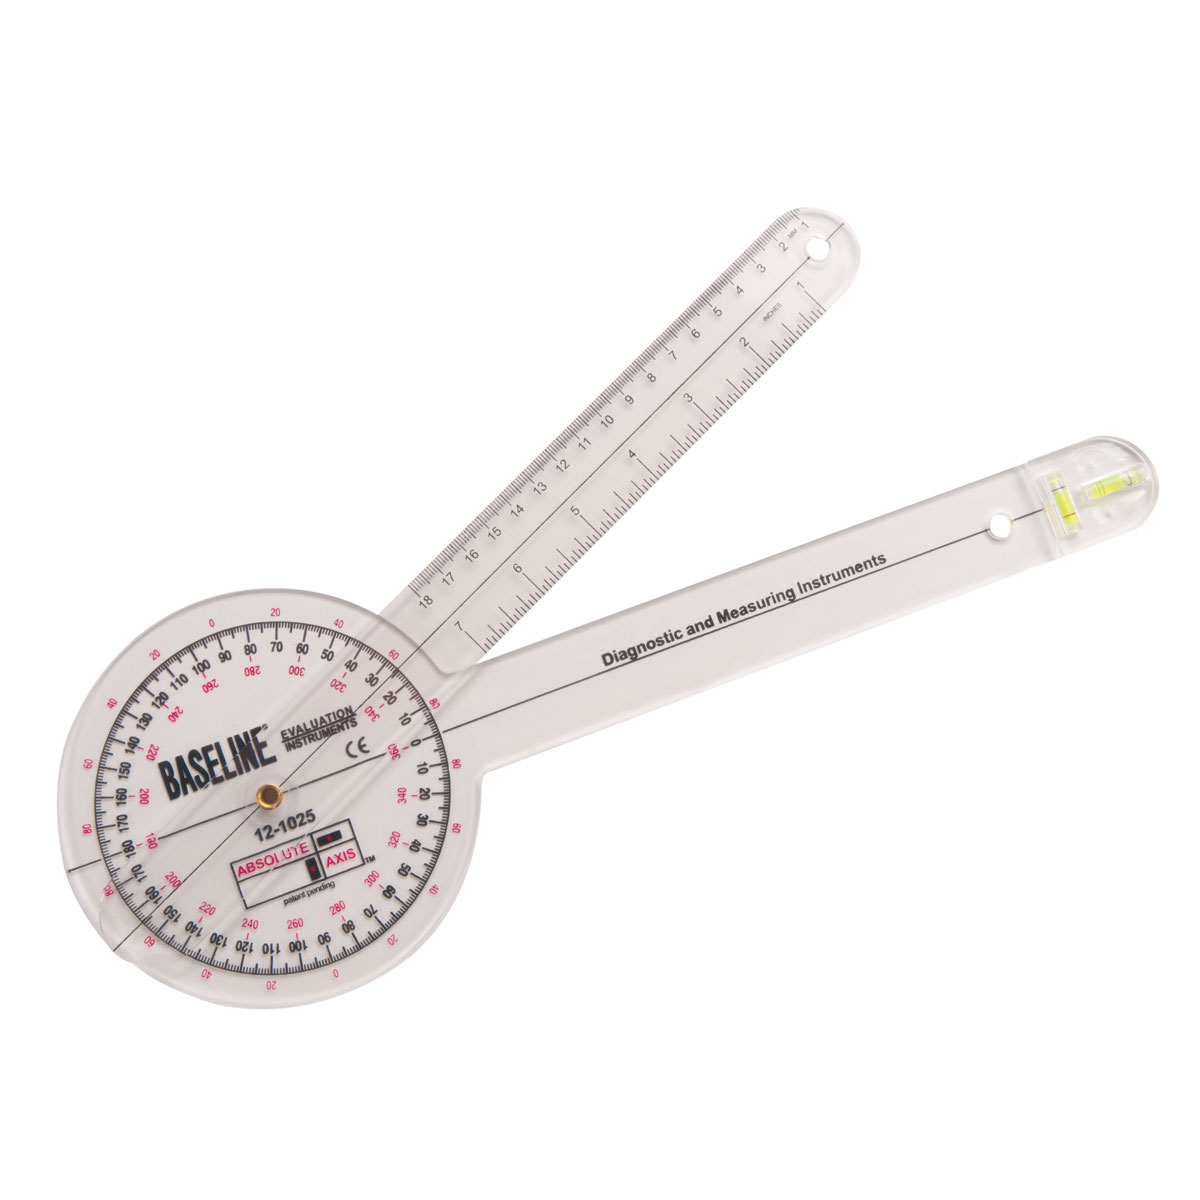 Baseline Plastic Absolute Axis 360o Goniometer Goniometers